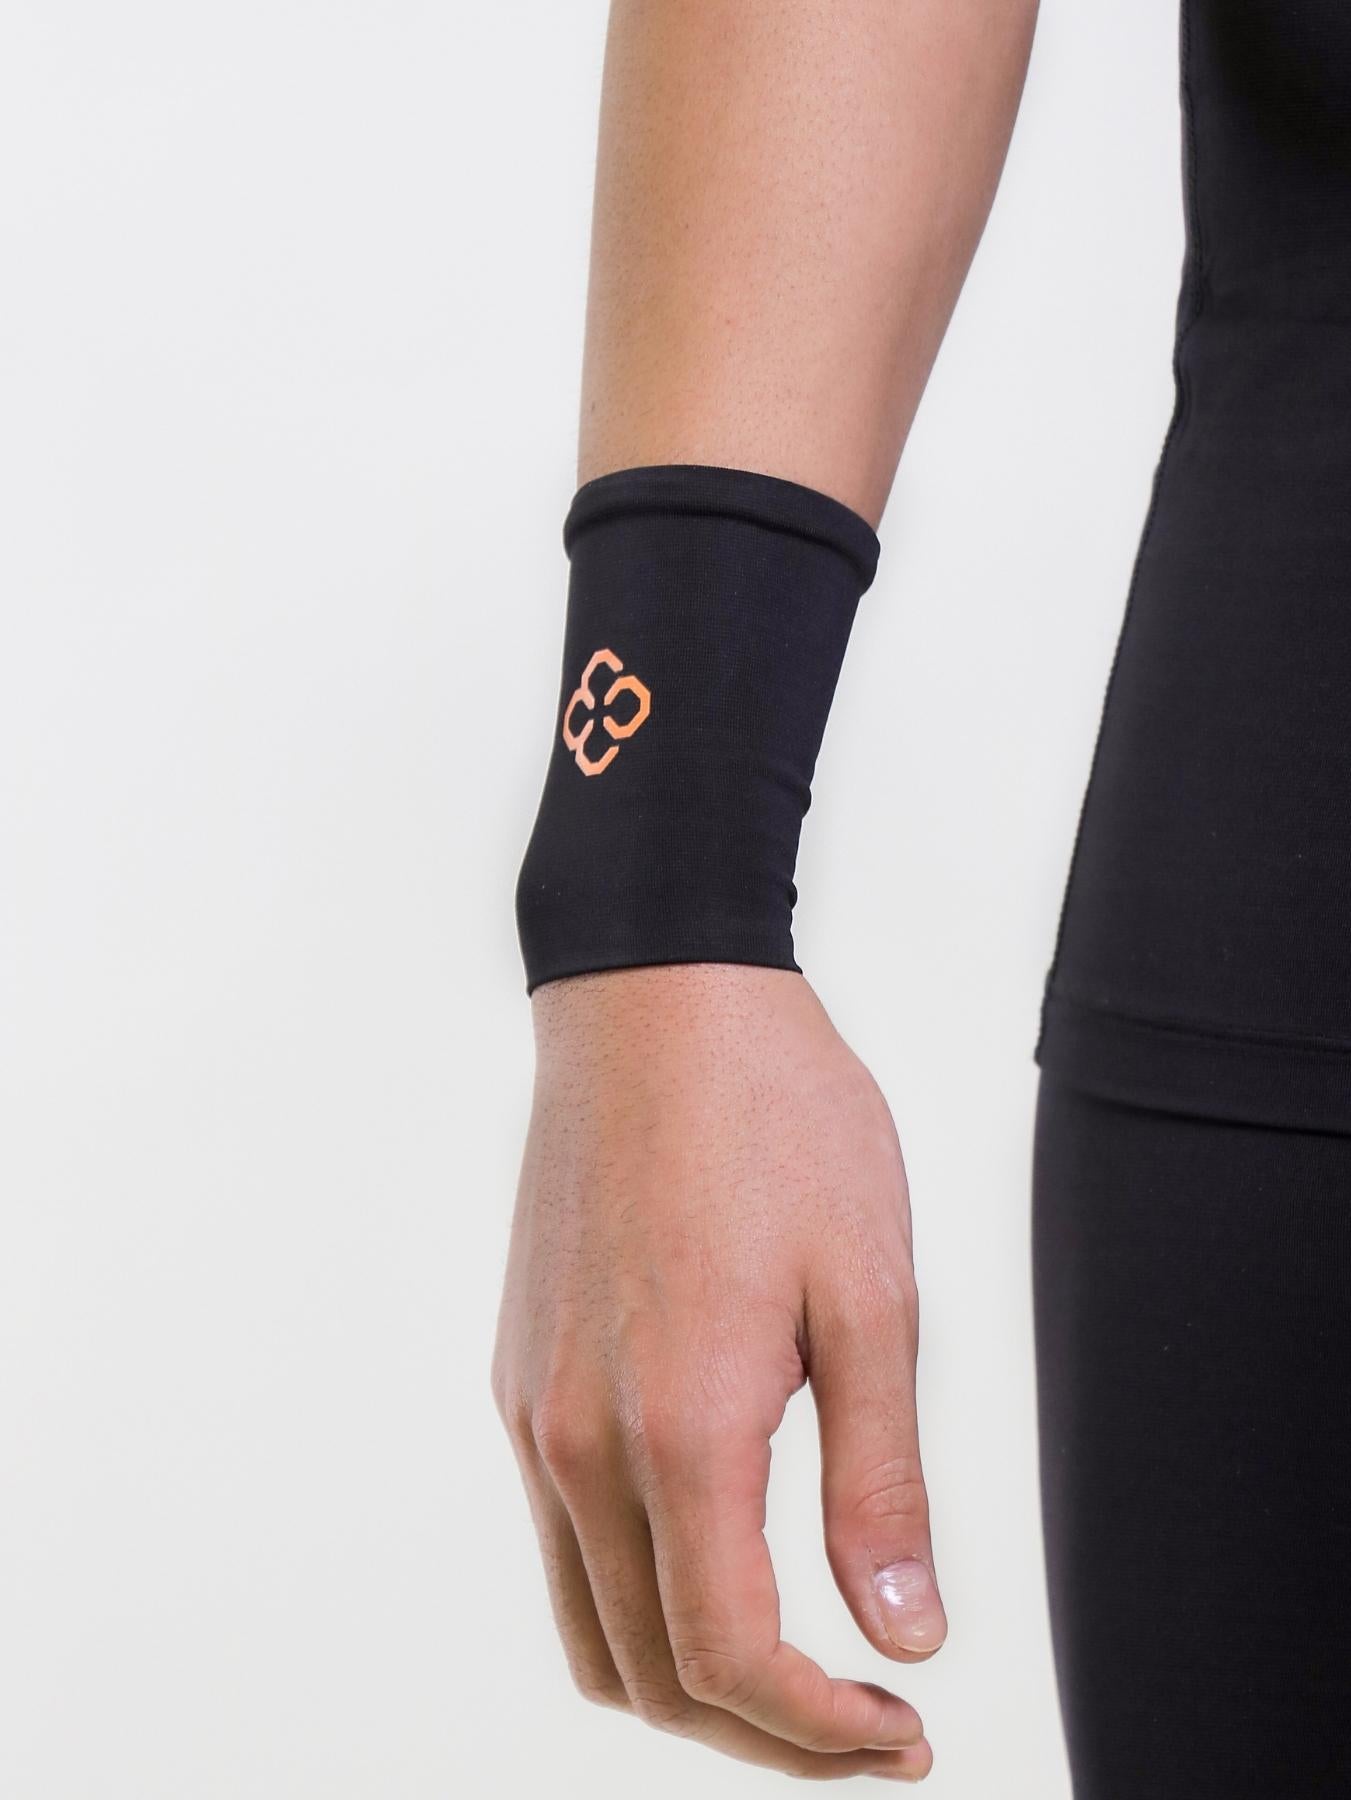 Copper Compression Wrist Sleeve - Unisex – Copper 88